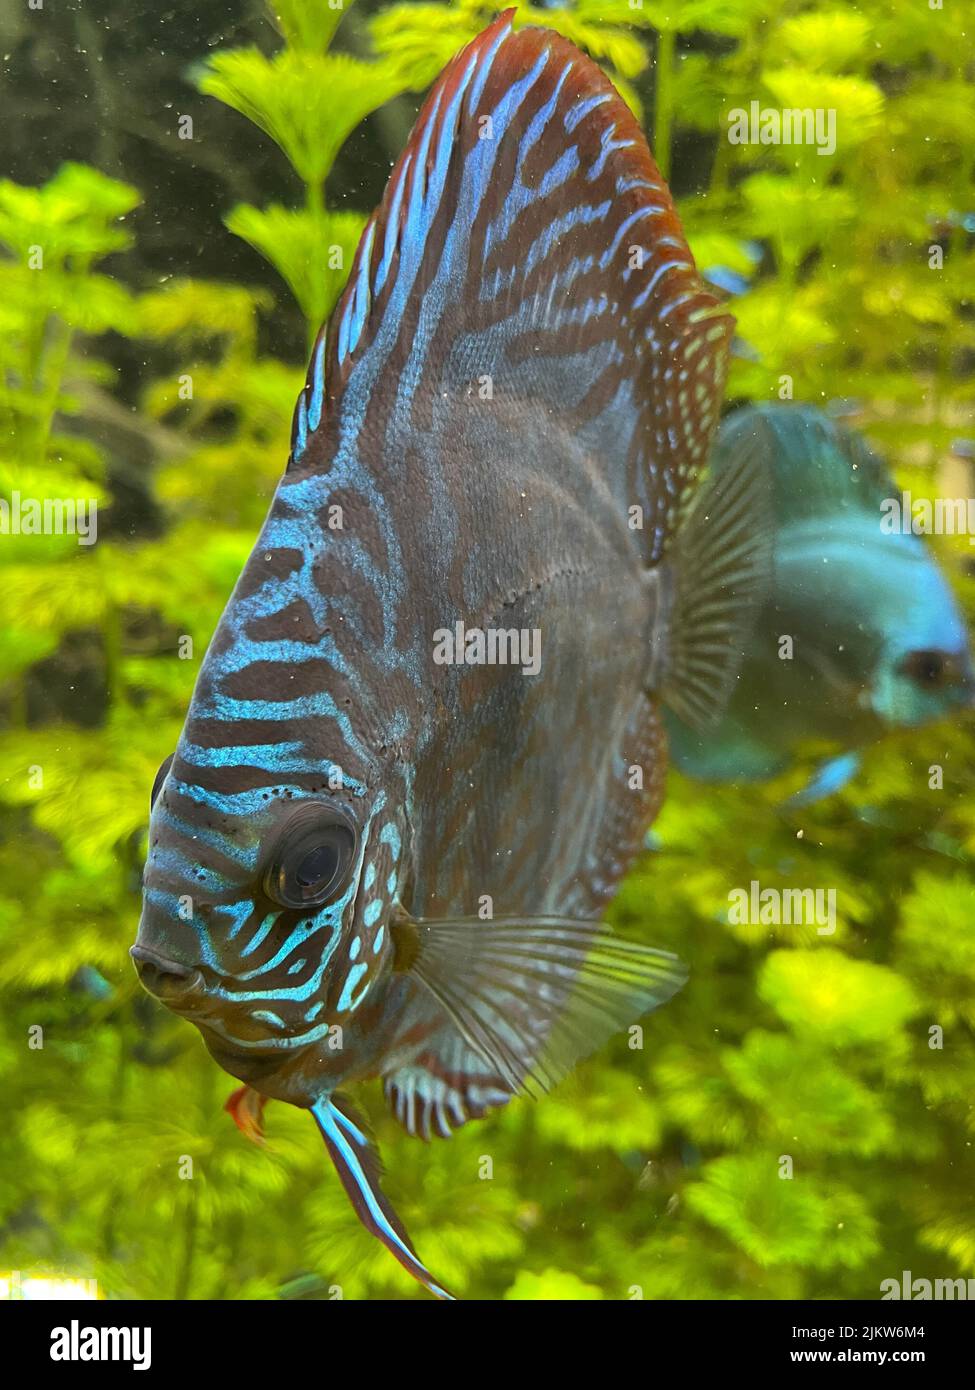 A vertical shot of Discus fish swimming in an aquarium Stock Photo